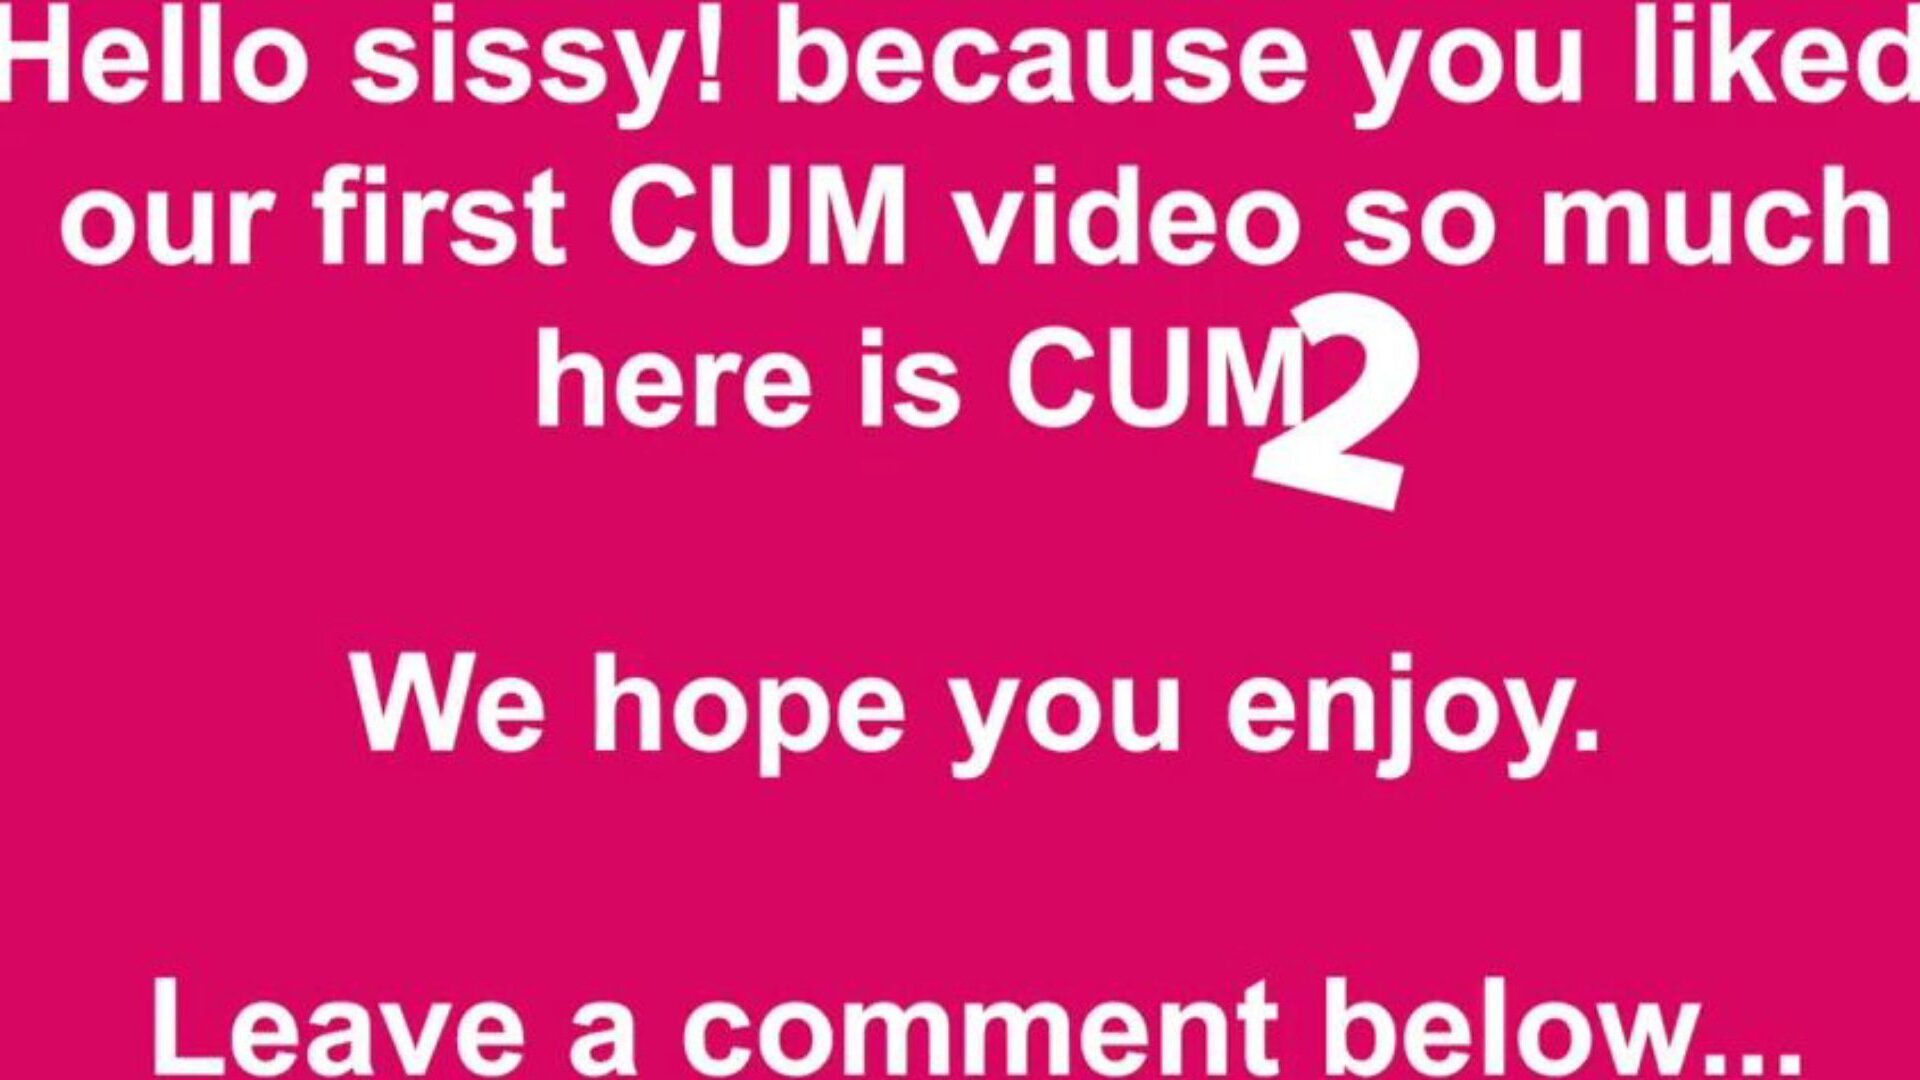 cum two free cum & cumming tube porn video 49 - xhamster guarda cum two tube fuck-a-thon video gratis su xhamster, con l'imperiosa collezione di cum cumming gratis tube & tube 2 episodi di film porno hd